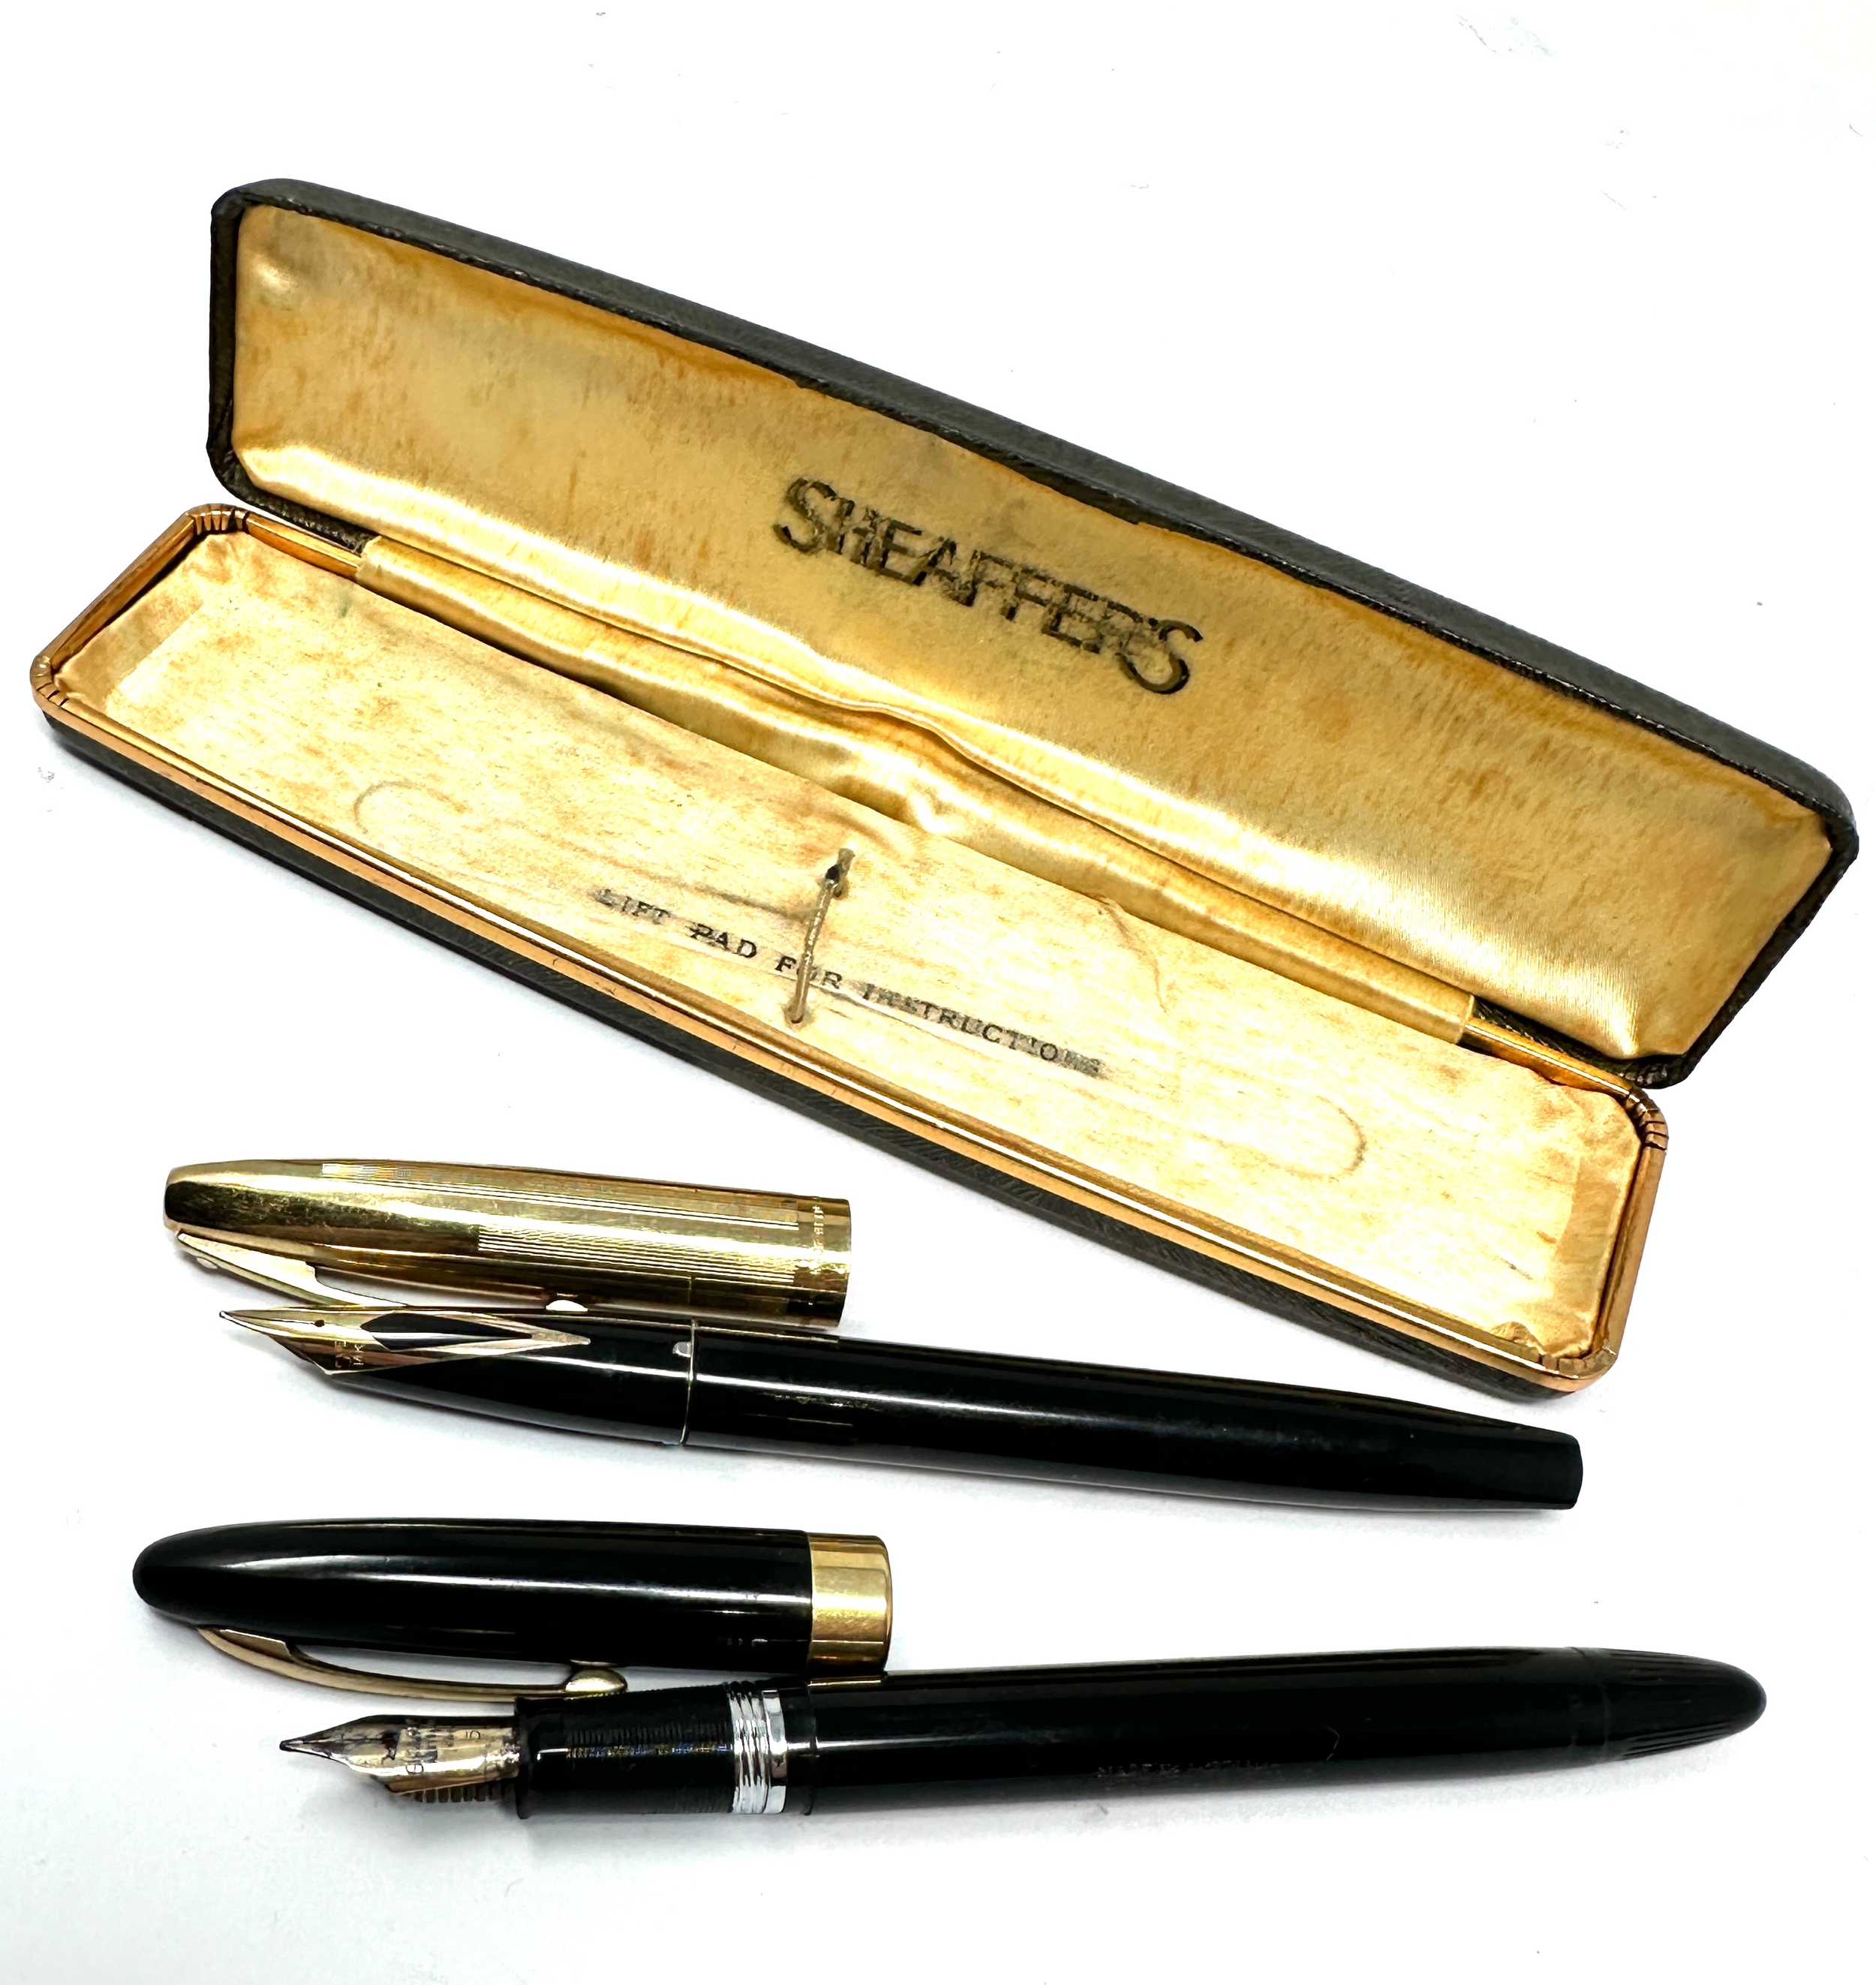 2 Vintage 14ct gold nib sheaffer fountain pens - Image 4 of 4